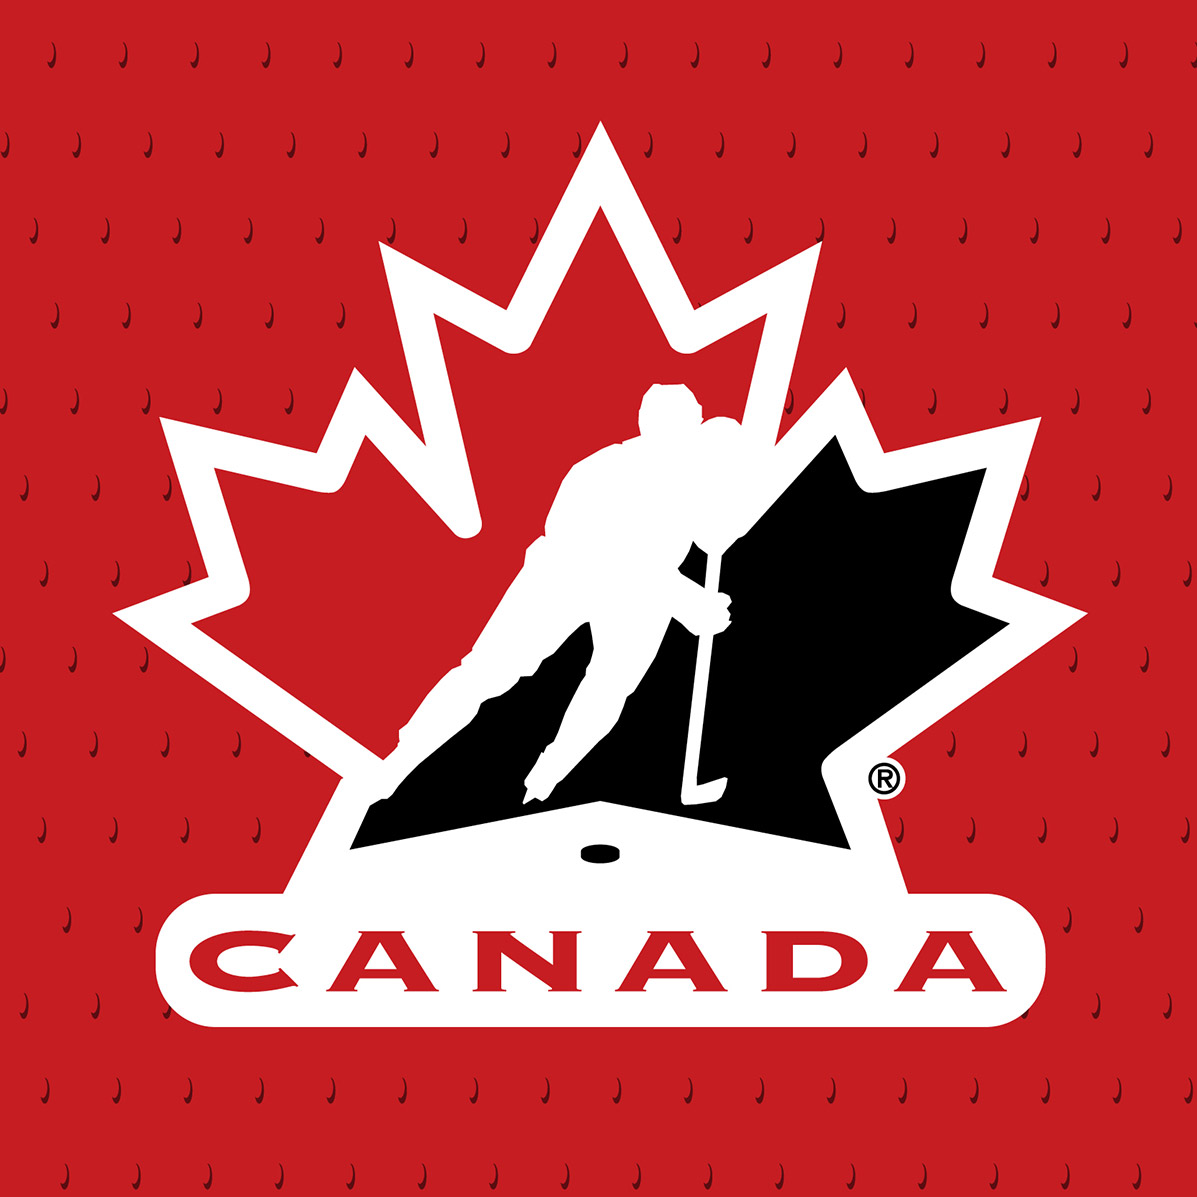 هاکی روی یخ در کانادا,ورزش در کانادا,سفر به کانادا,ویزای تضمینی کانادا,ویزای مولتی 5 ساله کانادا,ویزای توریستی کانادا,سفارت کانادا